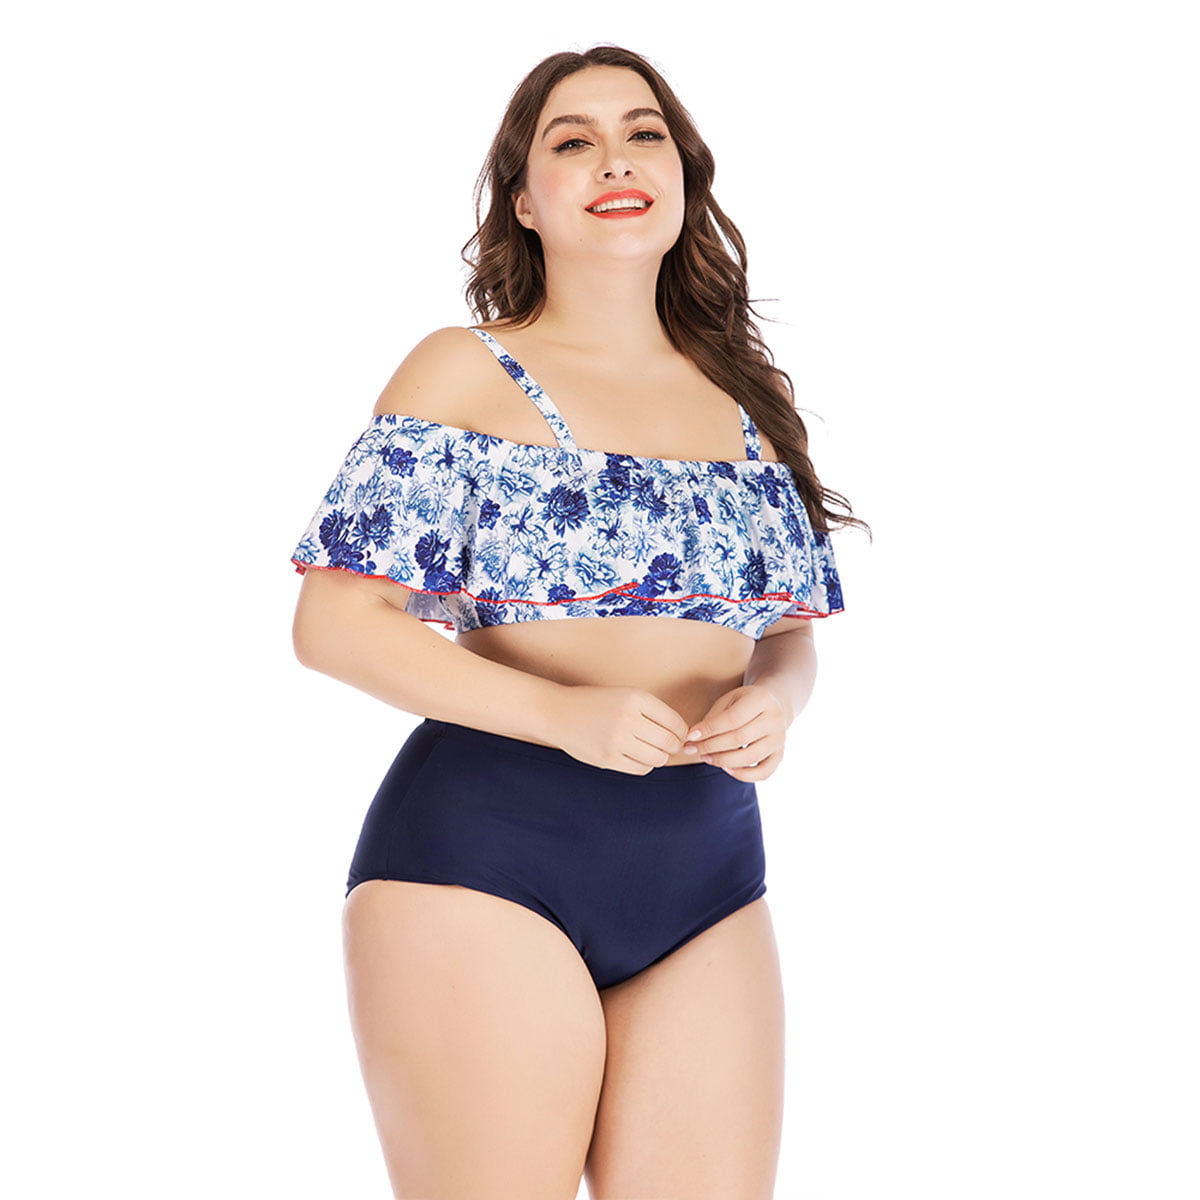 Acilnxm Womens Two-Piece Swimsuits Ruffled Sling Printed Swimwear with High Waisted Bottom Bikini Sets Tankini 